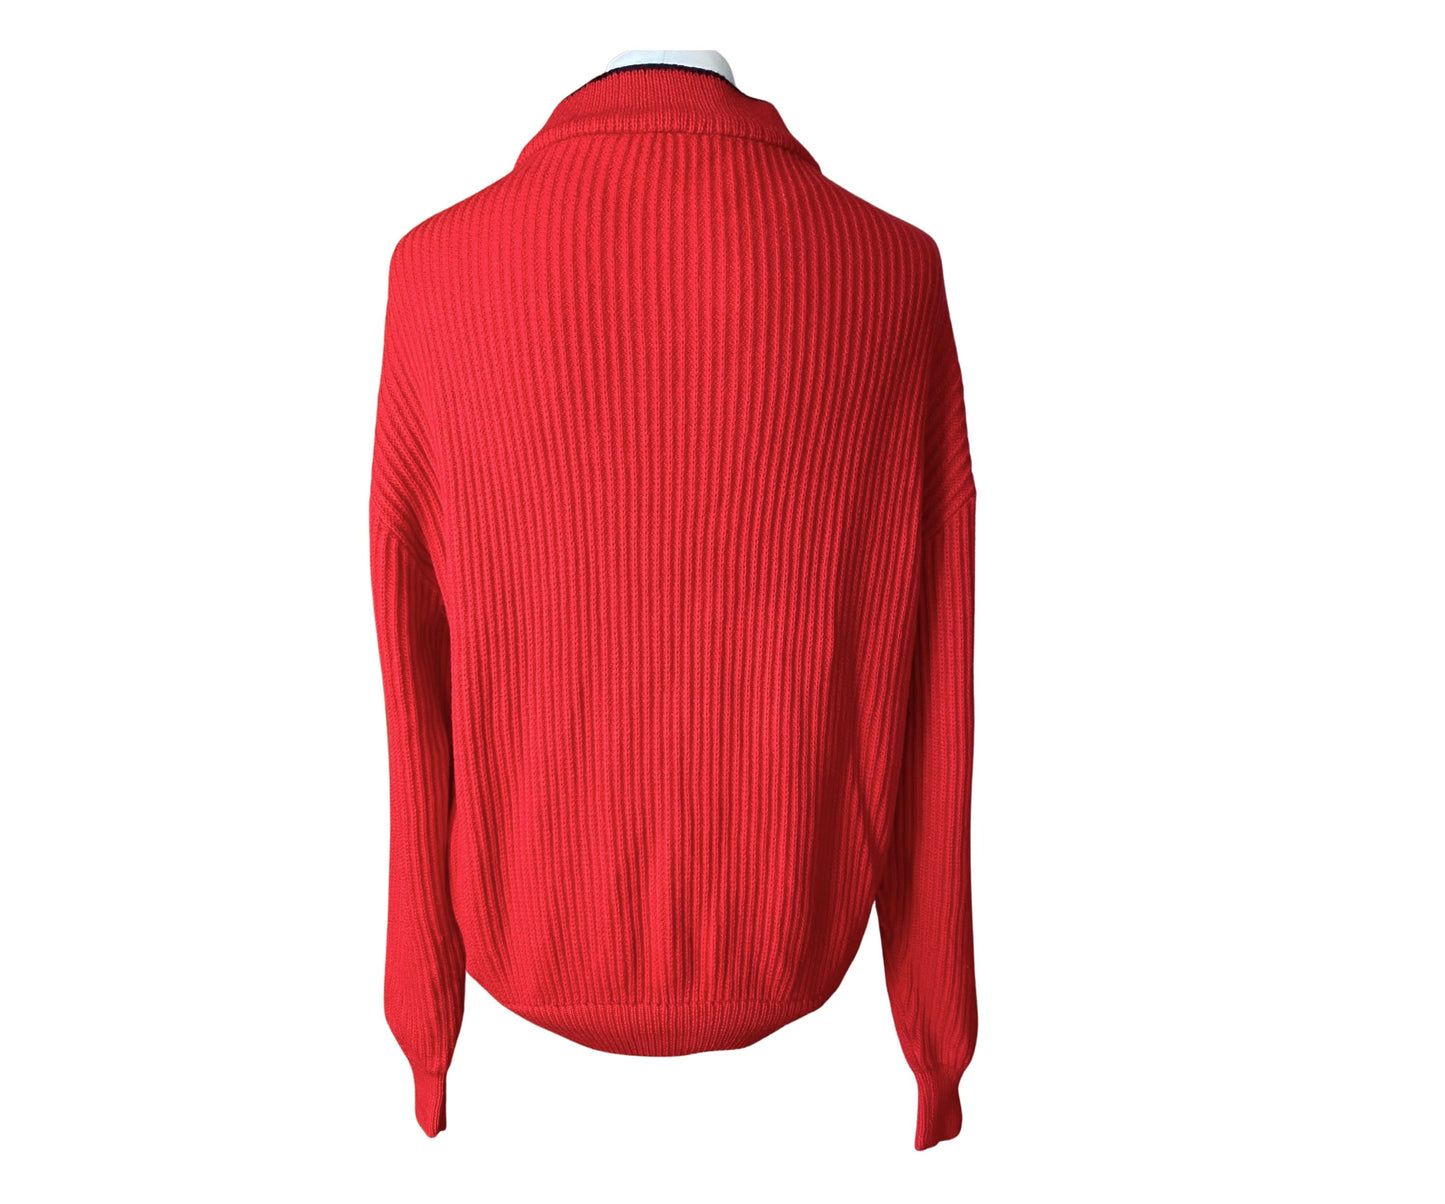 Vintage red ribbed chunky knit sailing jumper.  UK size men’s XXL - XXXL